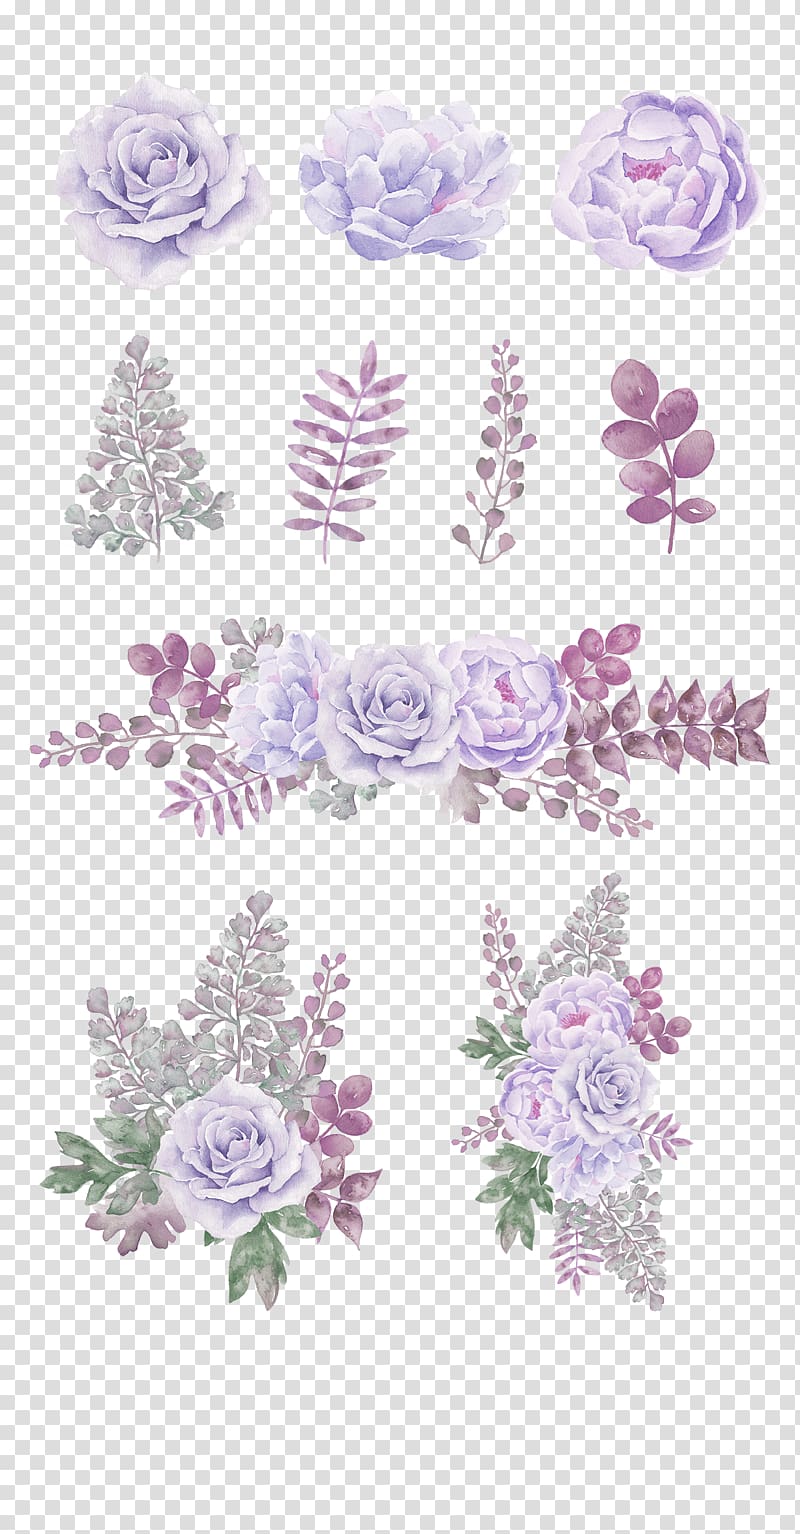 , Lavender fresh flowers decorative patterns, purple petaled flower illustration transparent background PNG clipart